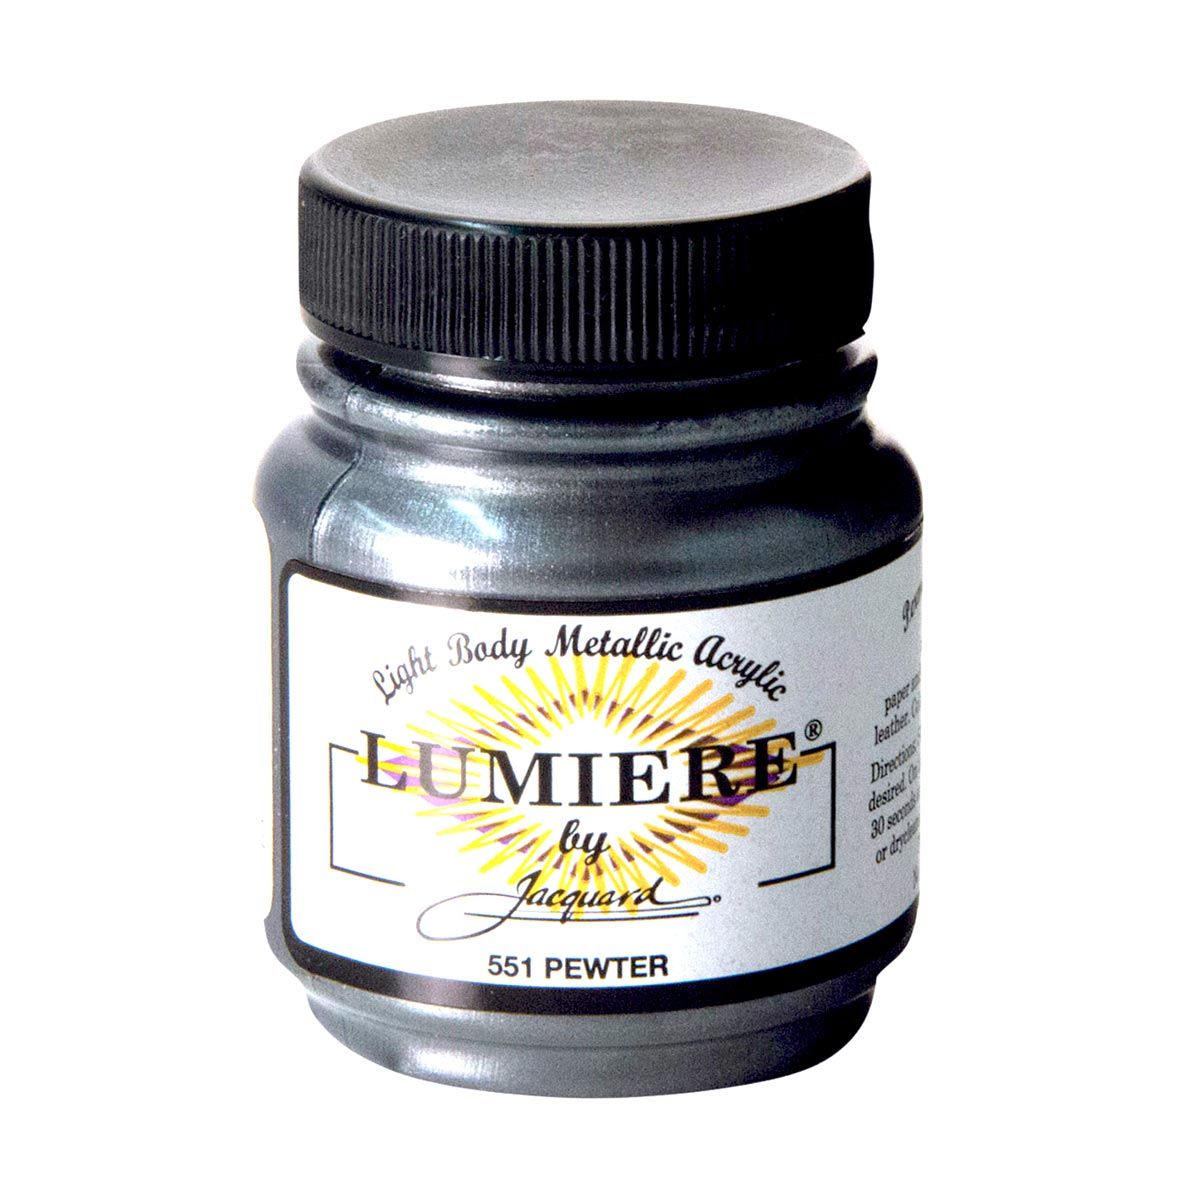 Jacquard Lumiere Acrylic 551 Pewter 2.25-oz Jar